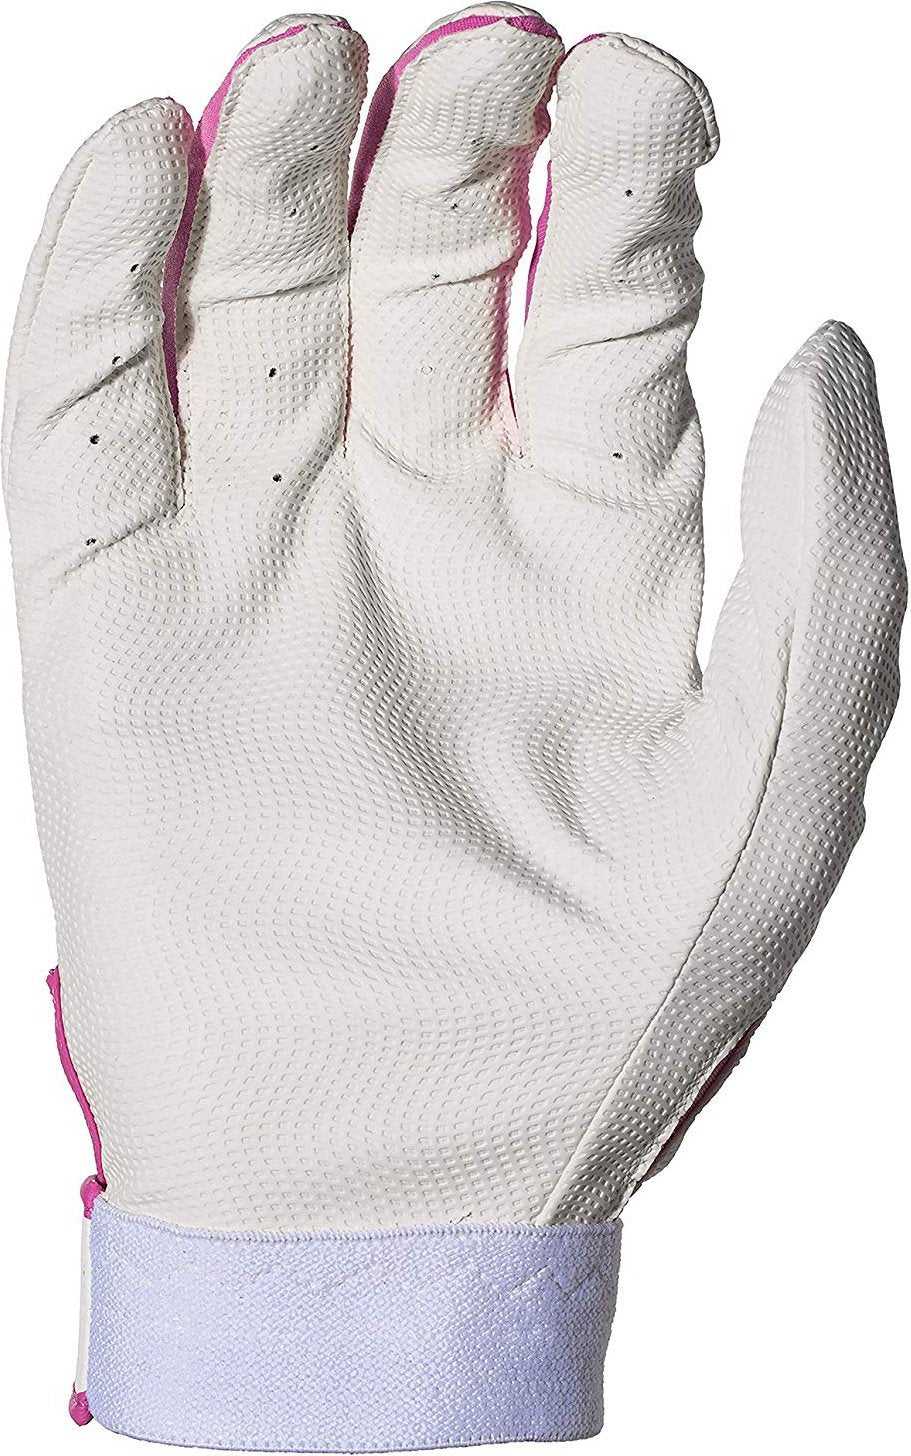 Franklin Teeball Flex Series Batting Gloves - White Pink - HIT a Double